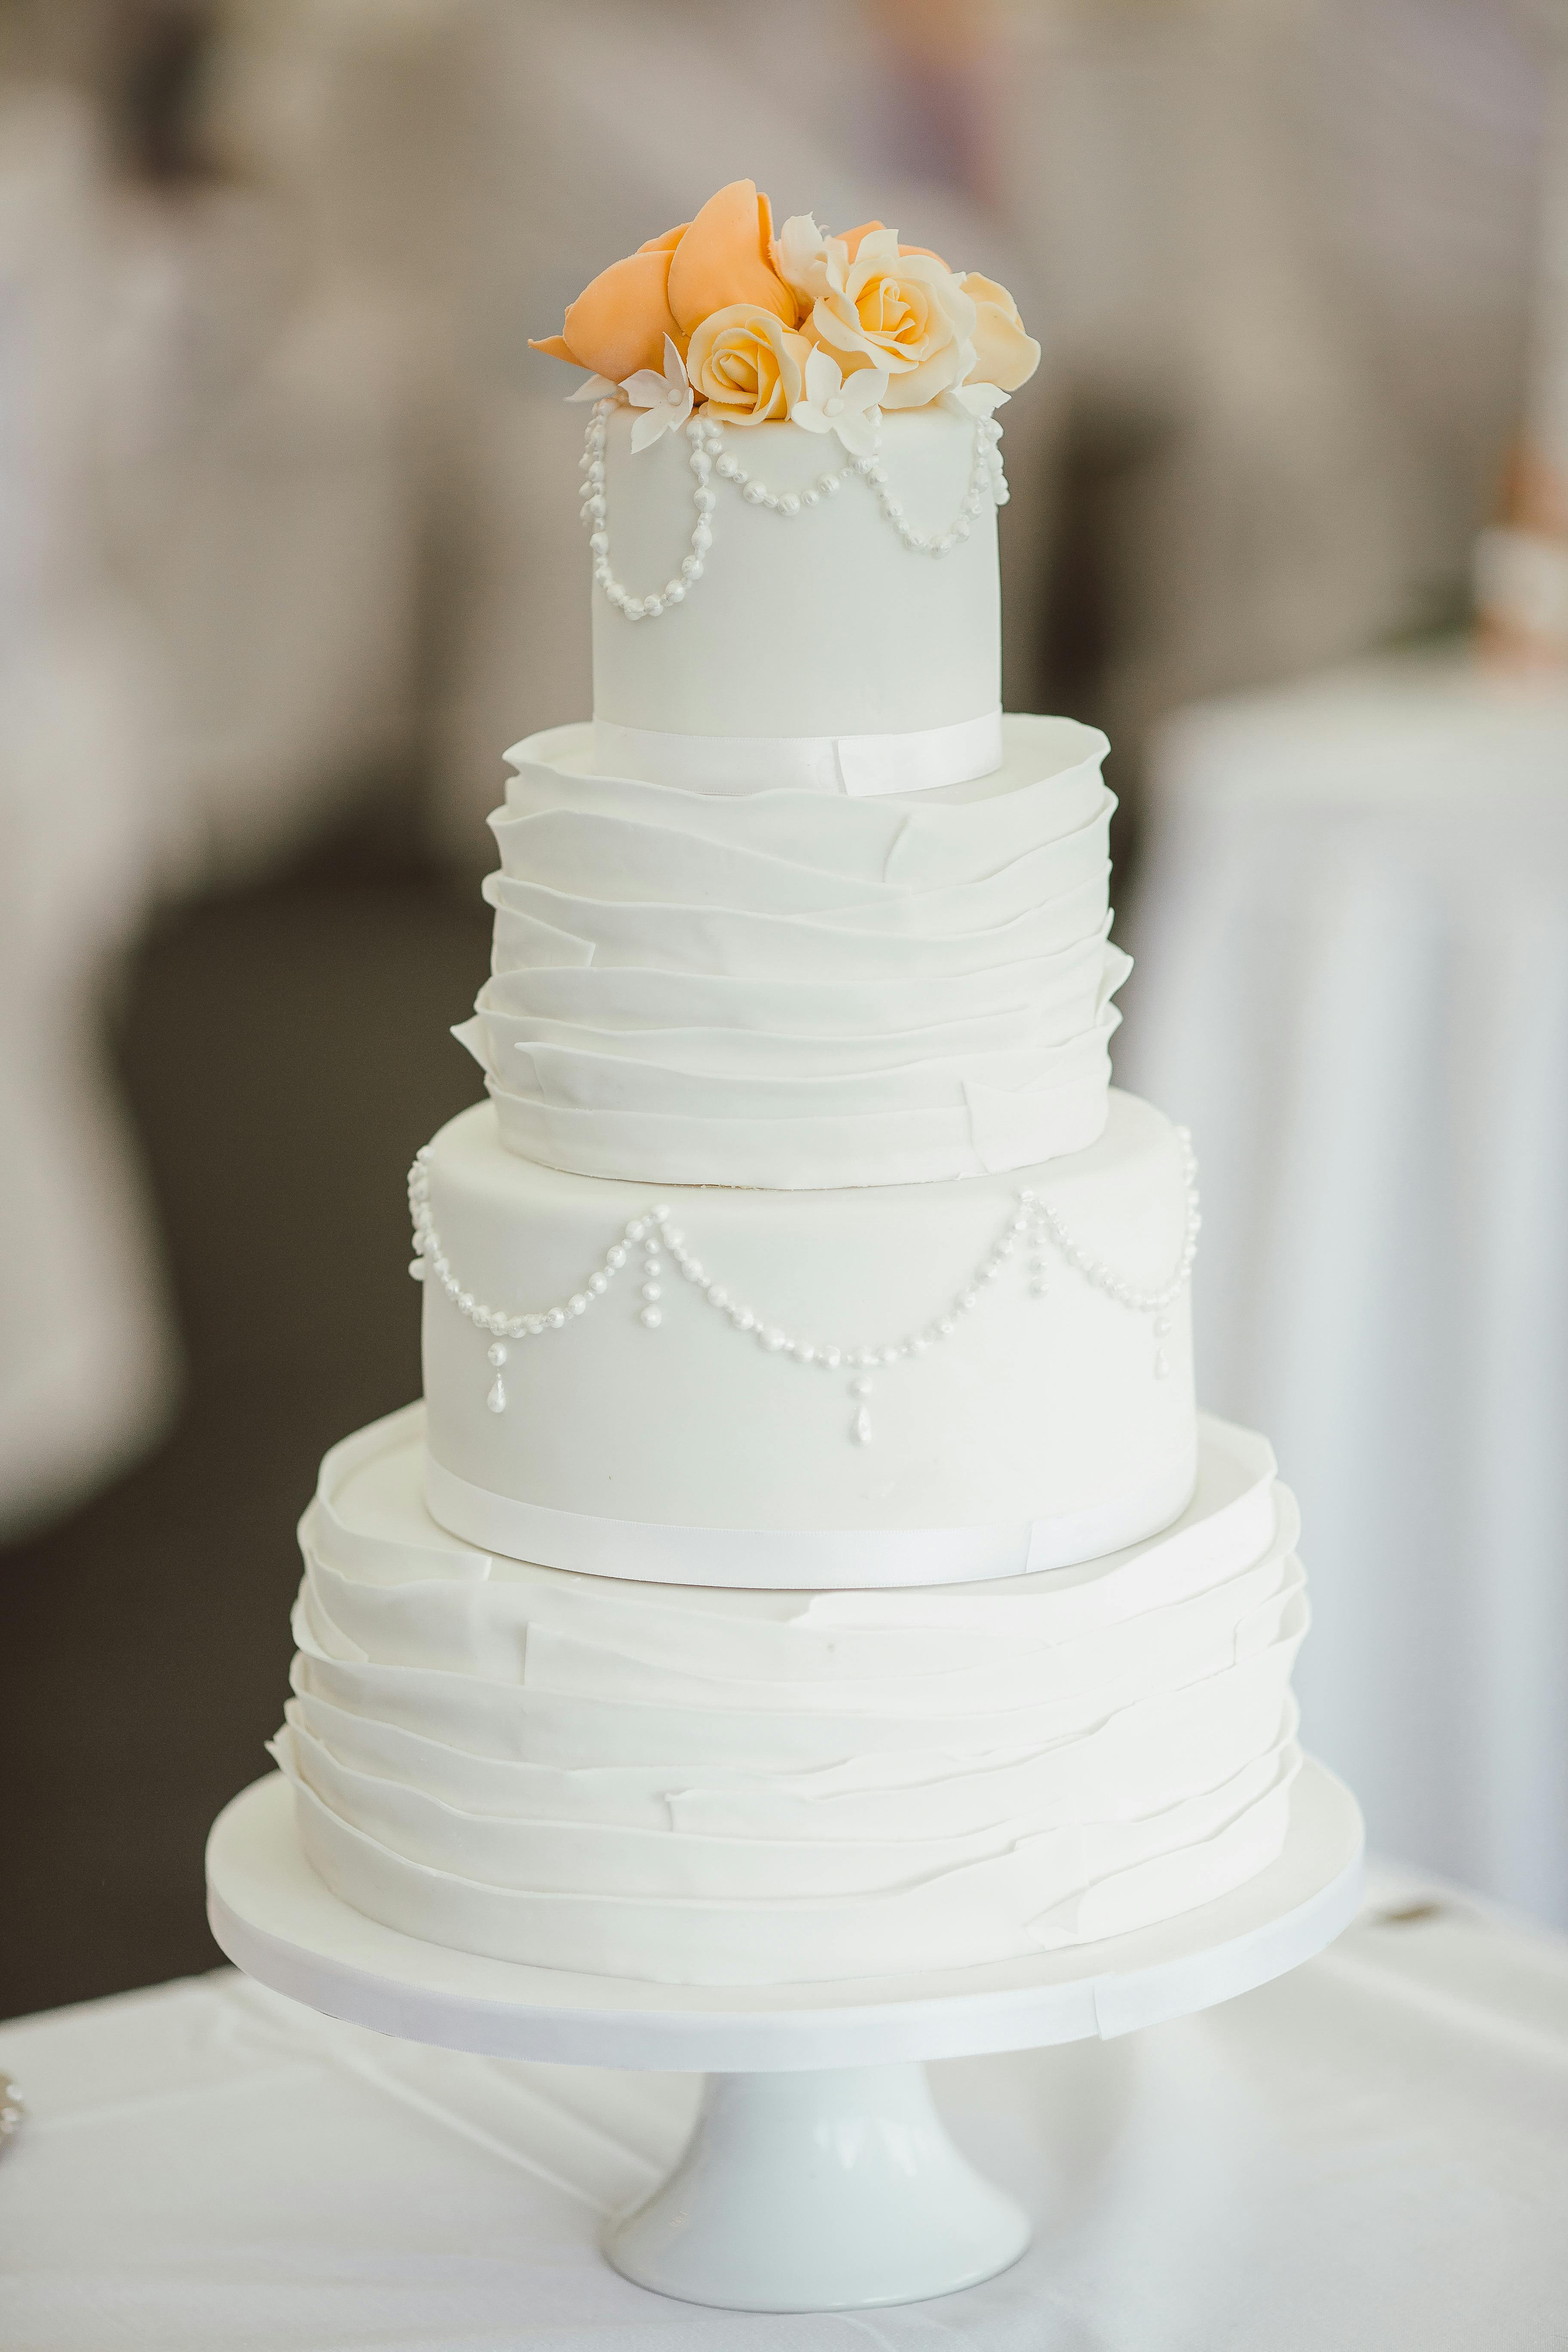 Wedding cake | Source: Pexels